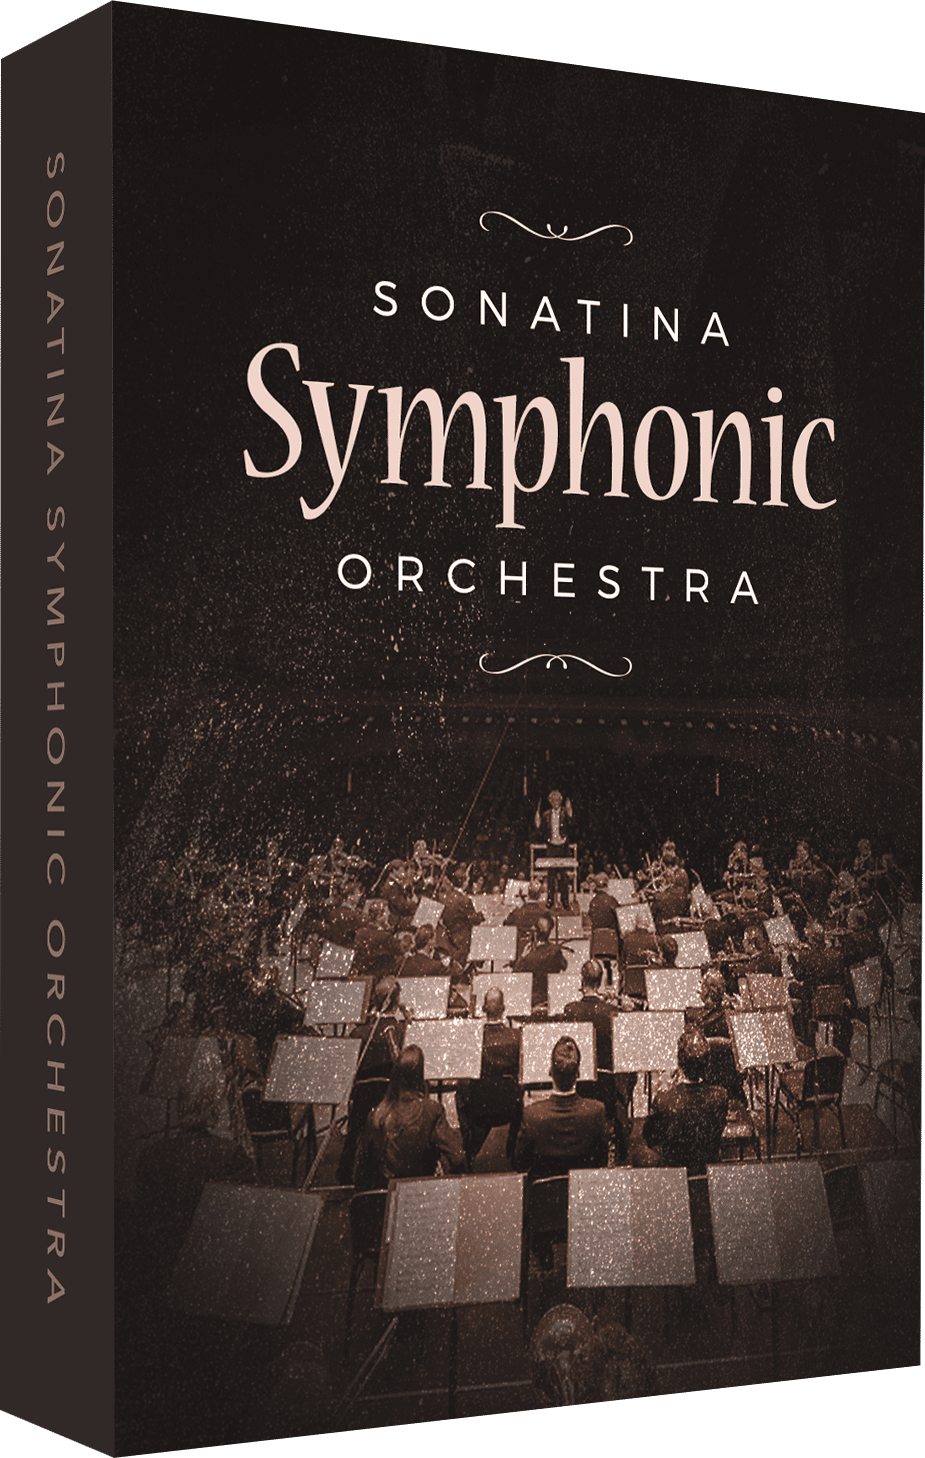 "Sonatina Symphonic Orchestra" VST Plugin